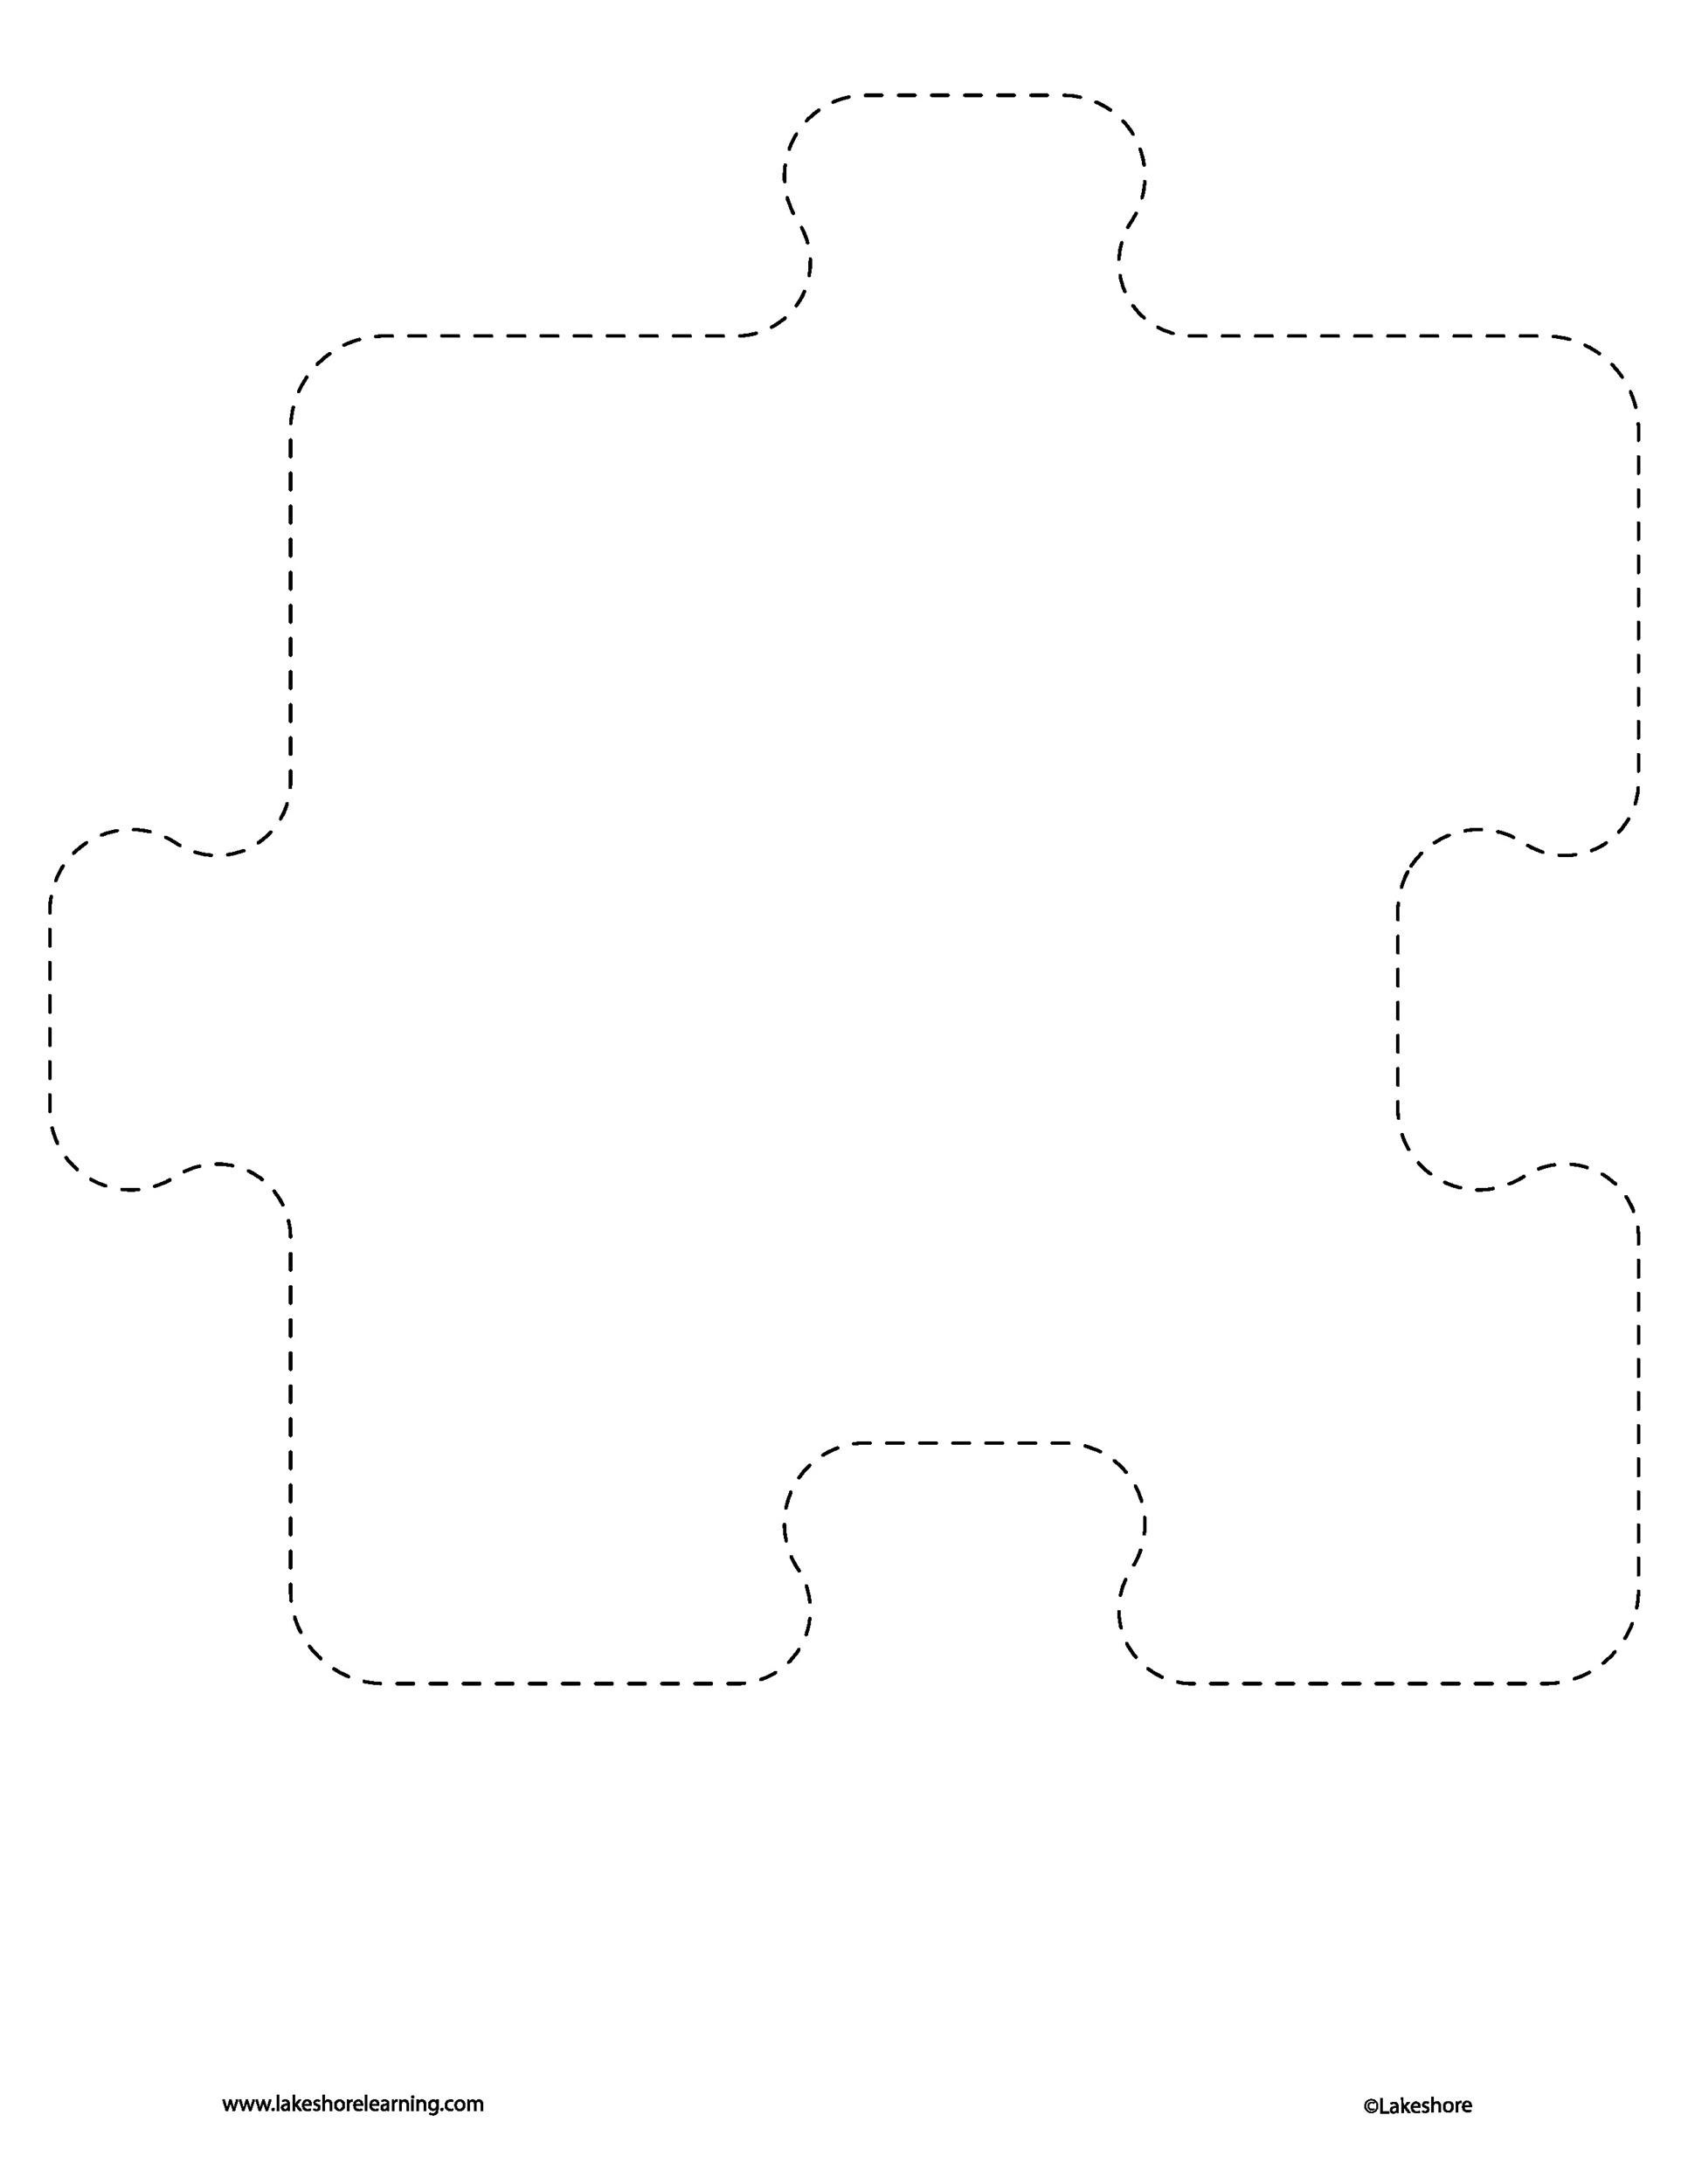 19 Printable Puzzle Piece Templates ᐅ TemplateLab